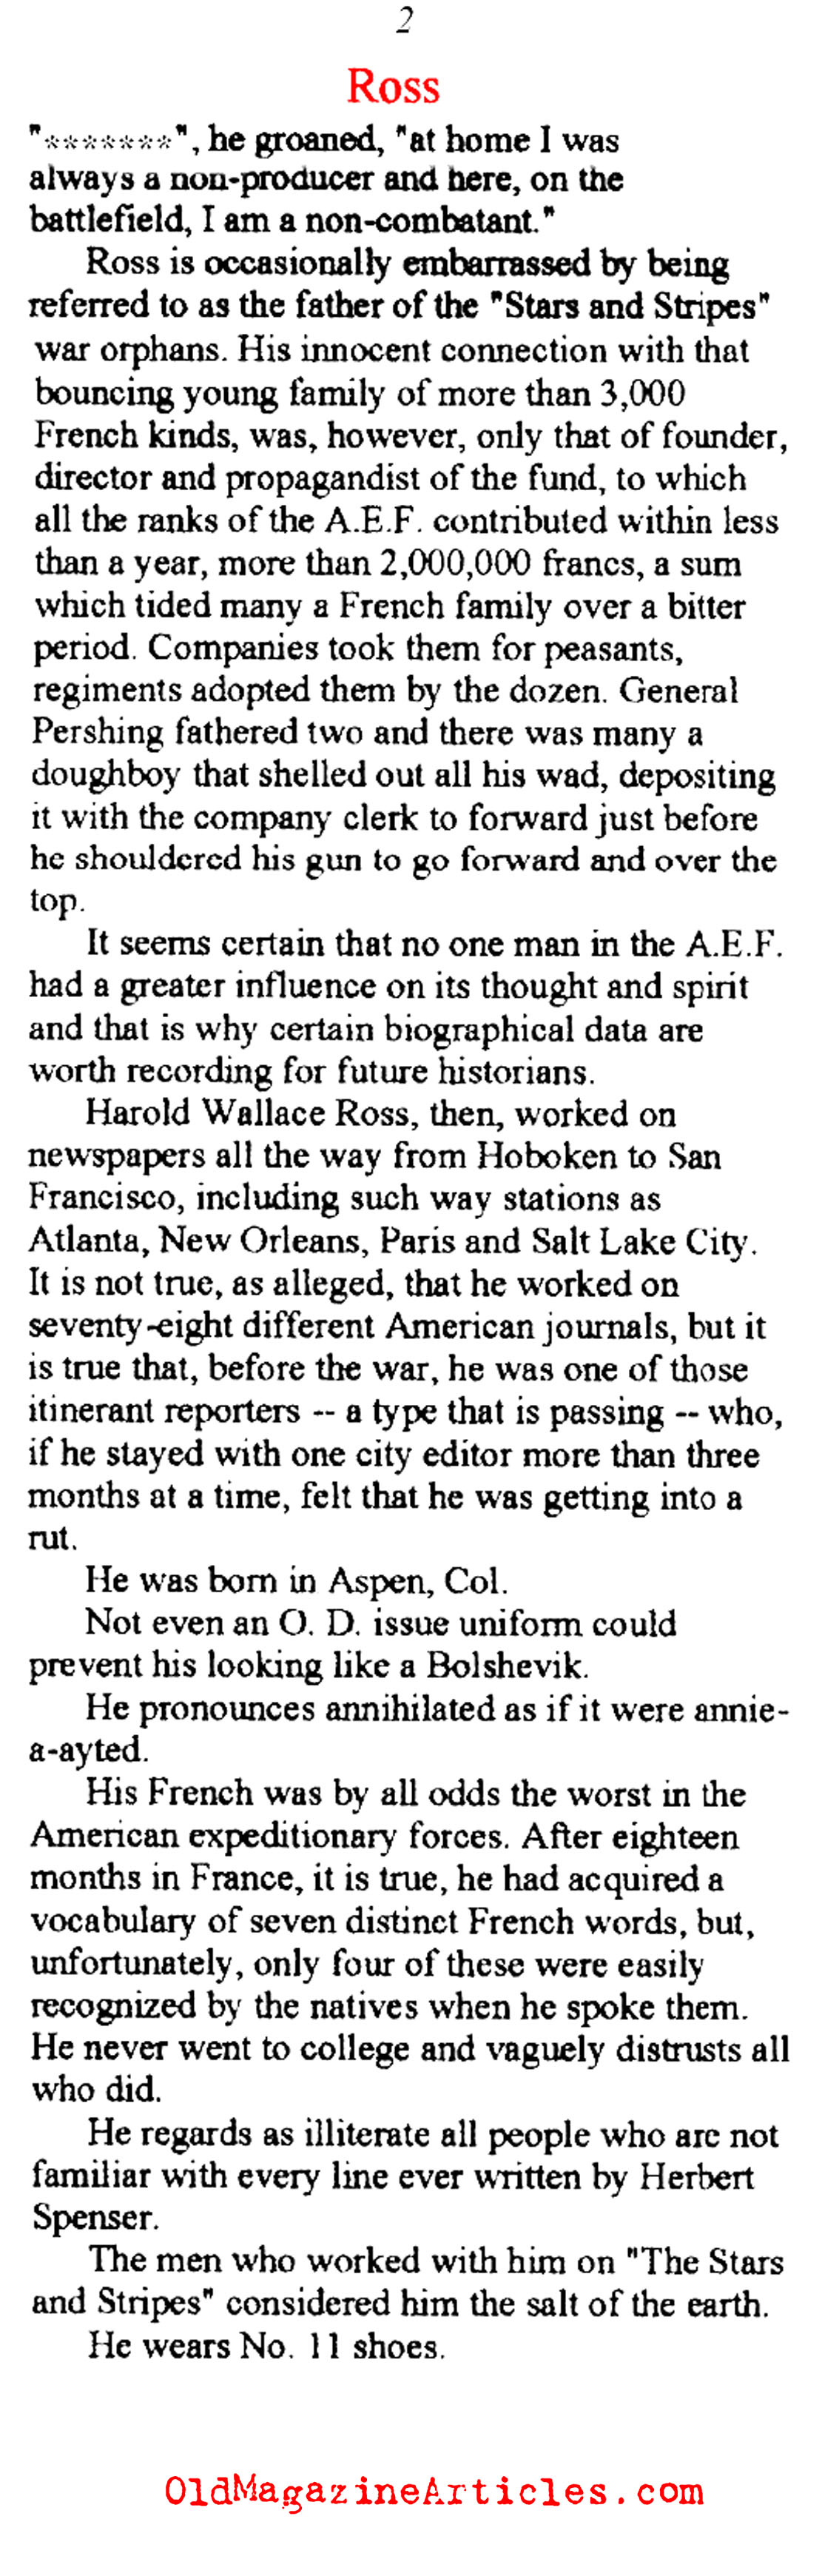 Harold Ross: Managing Editor of <I>  The Stars & Stripes</I>    (New York Tribune, 1919)